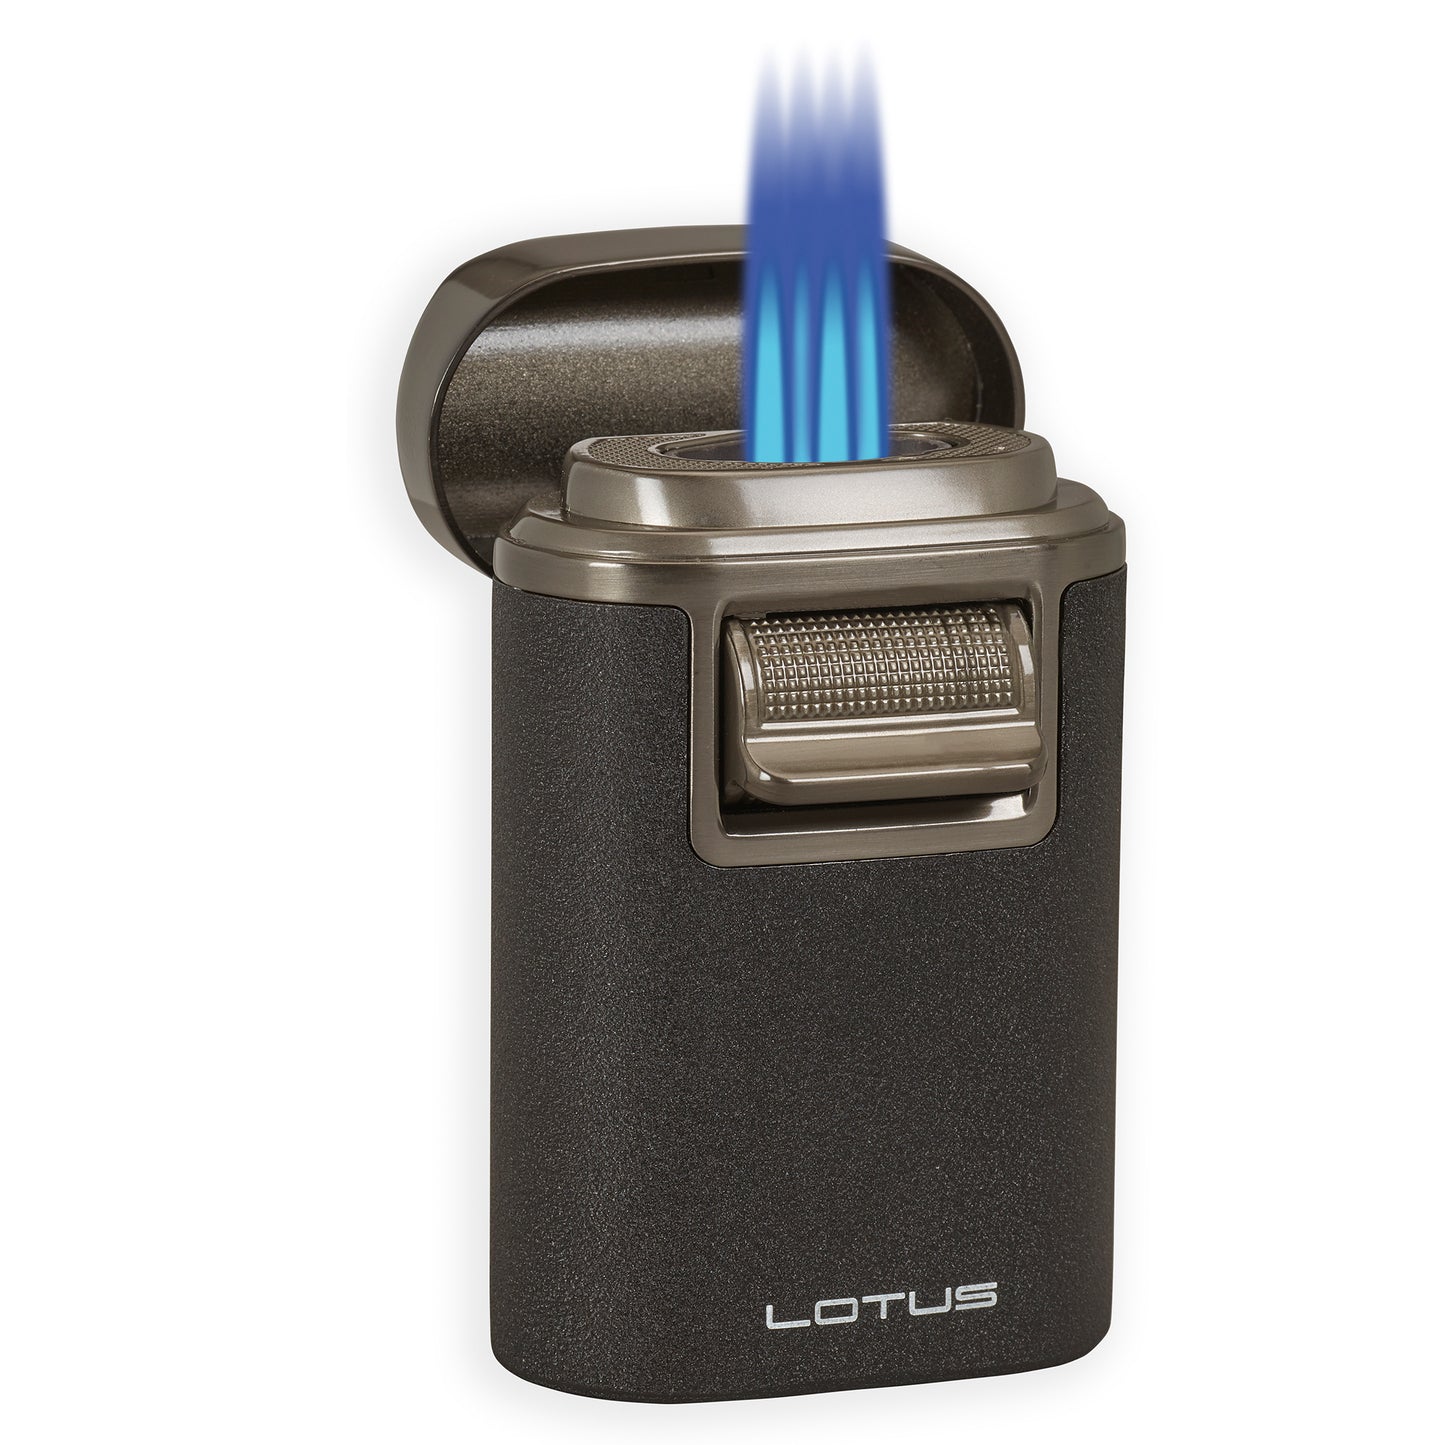 Brawn Table Jet Lighter by LOTUS